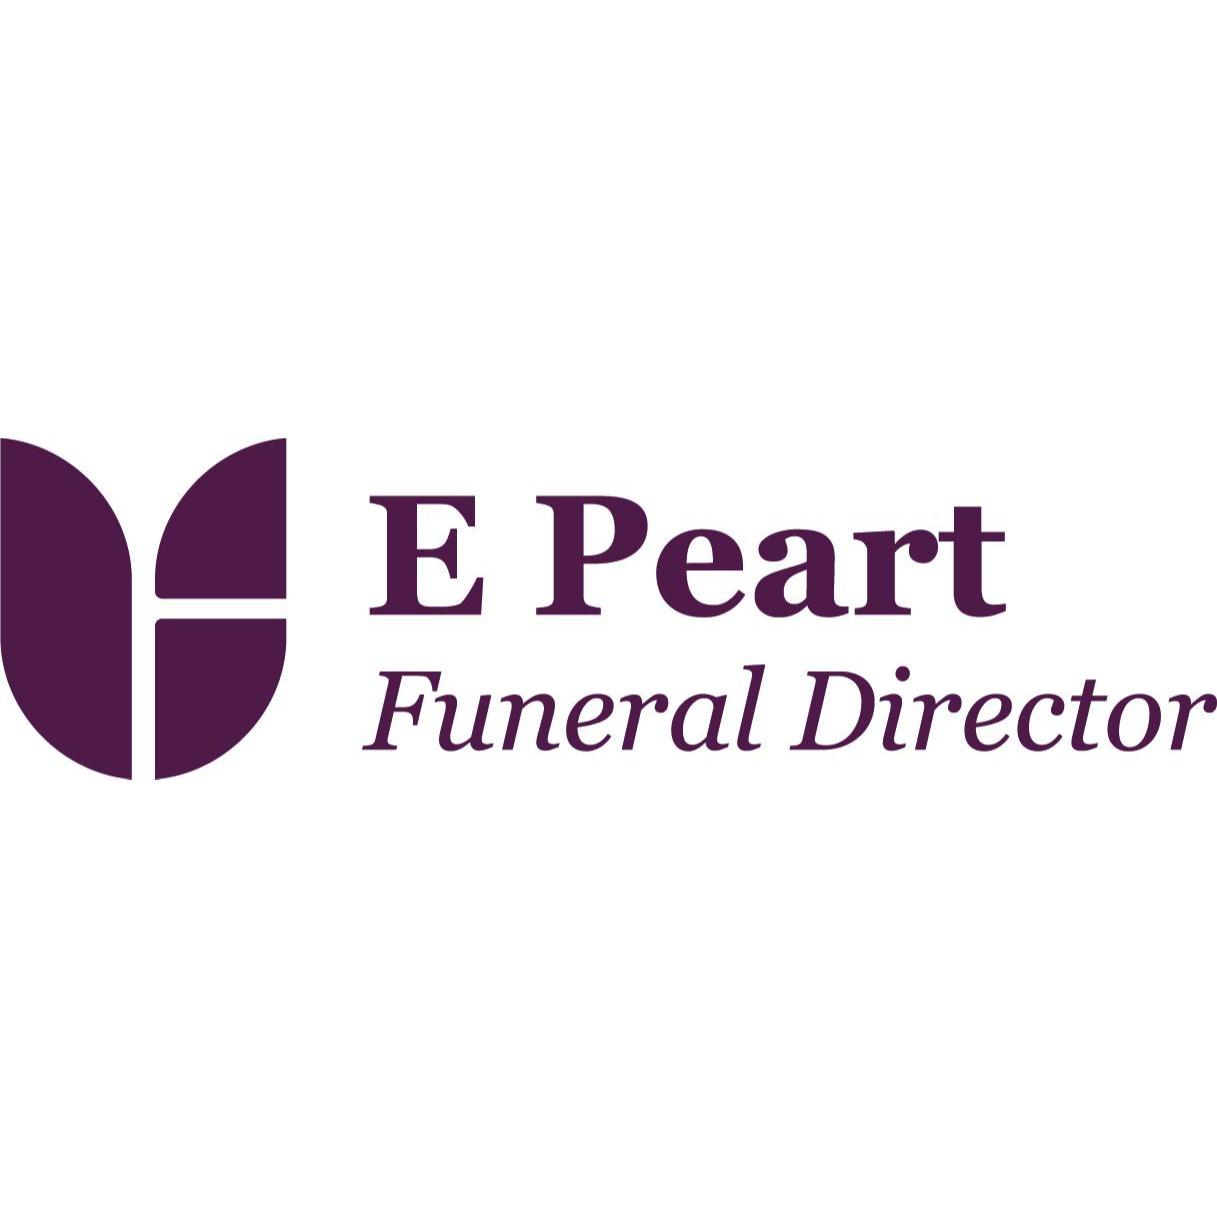 E Peart Funeral Director Logo